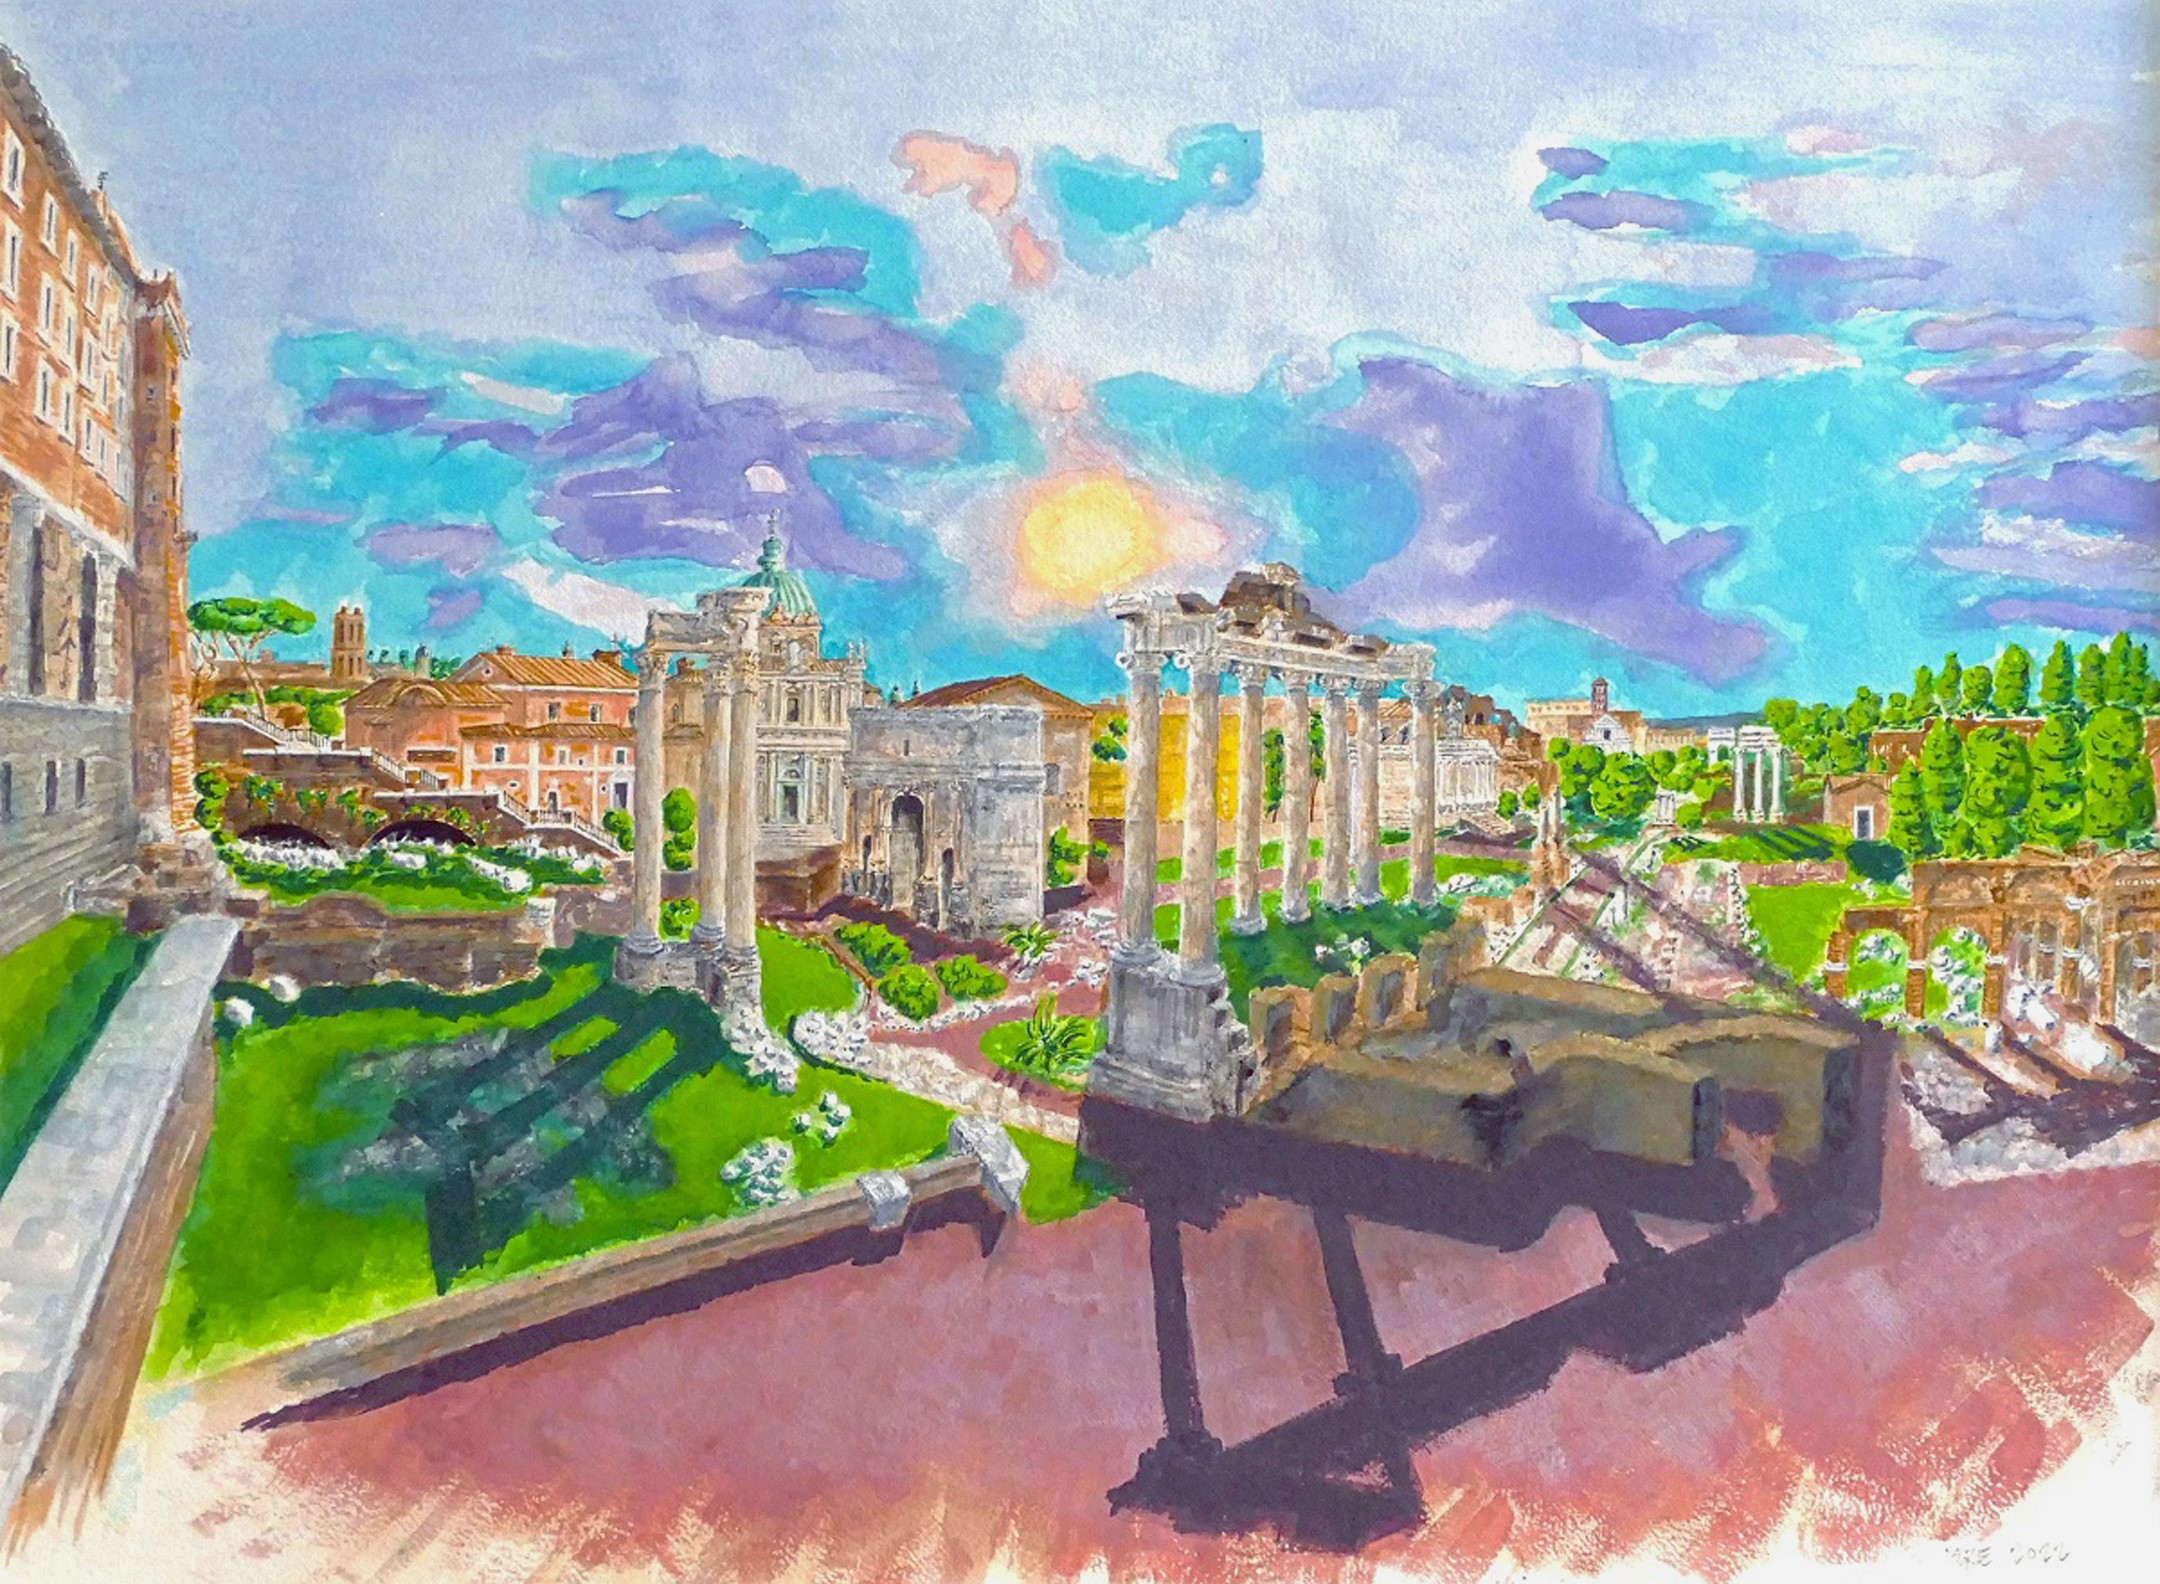 RUSZ, M.E. - View of the Forum Romanum, Rome, Italy - Watercolor - 22 x 30